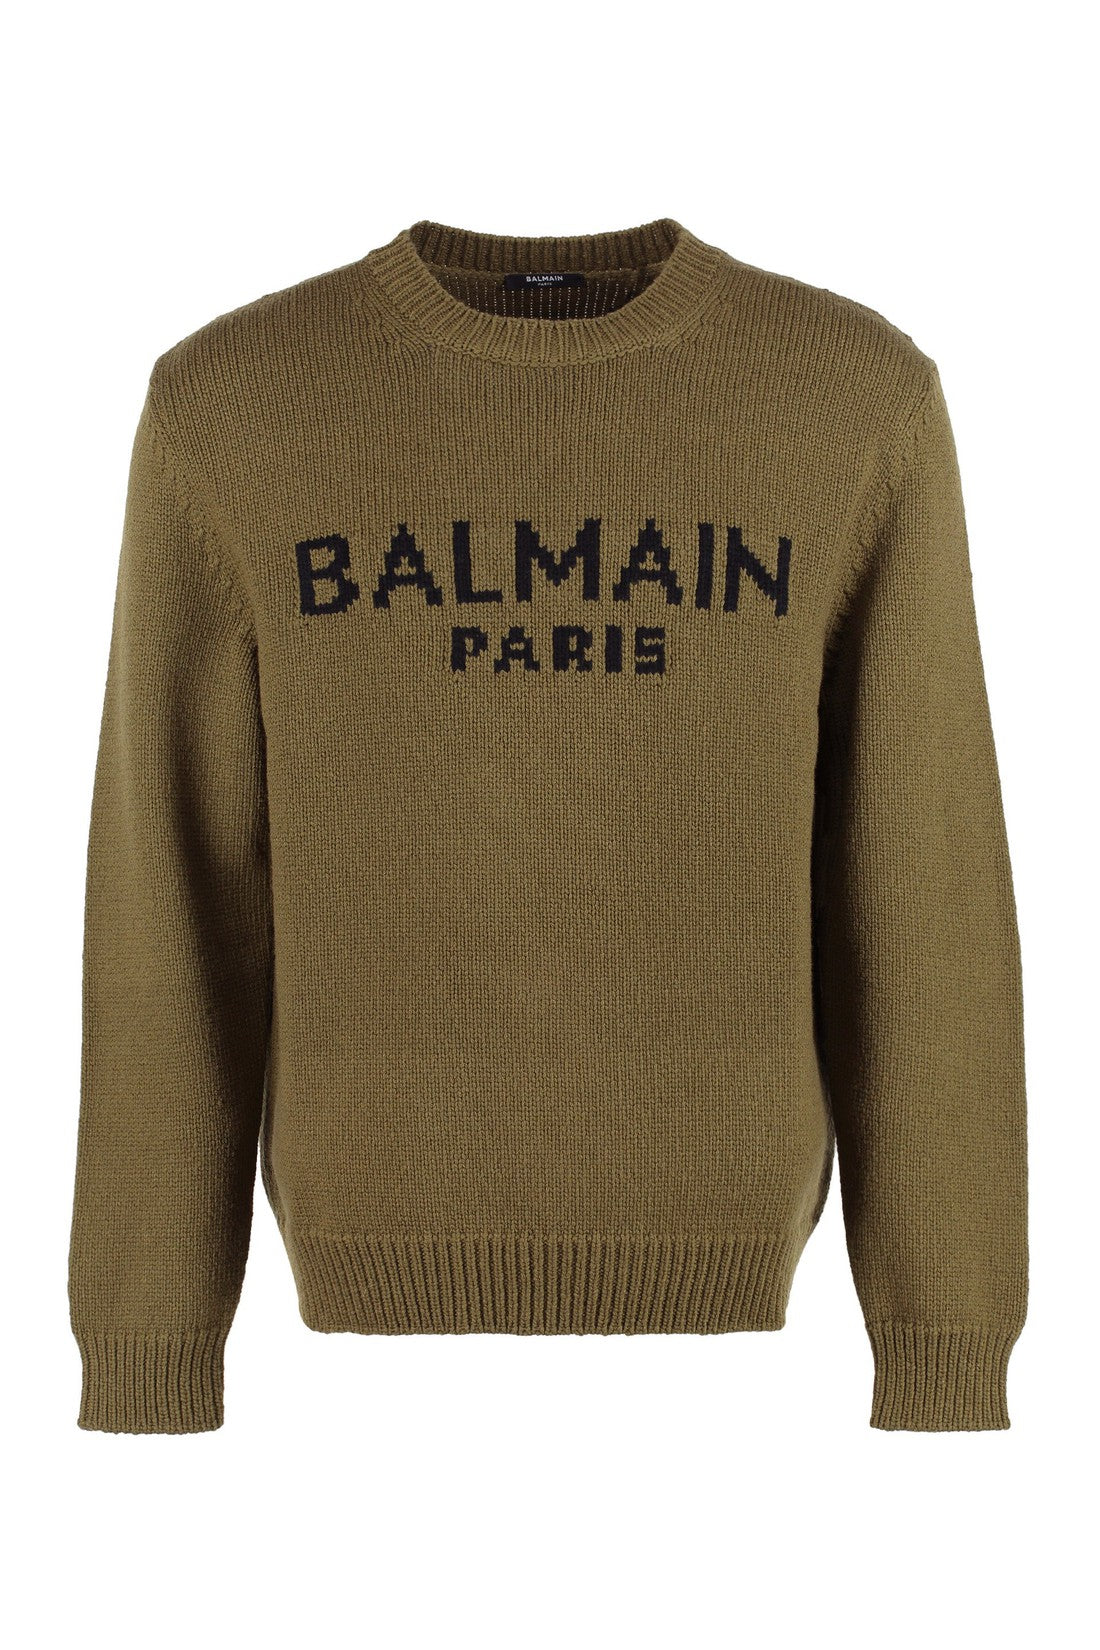 Balmain-OUTLET-SALE-Wool blend pullover-ARCHIVIST